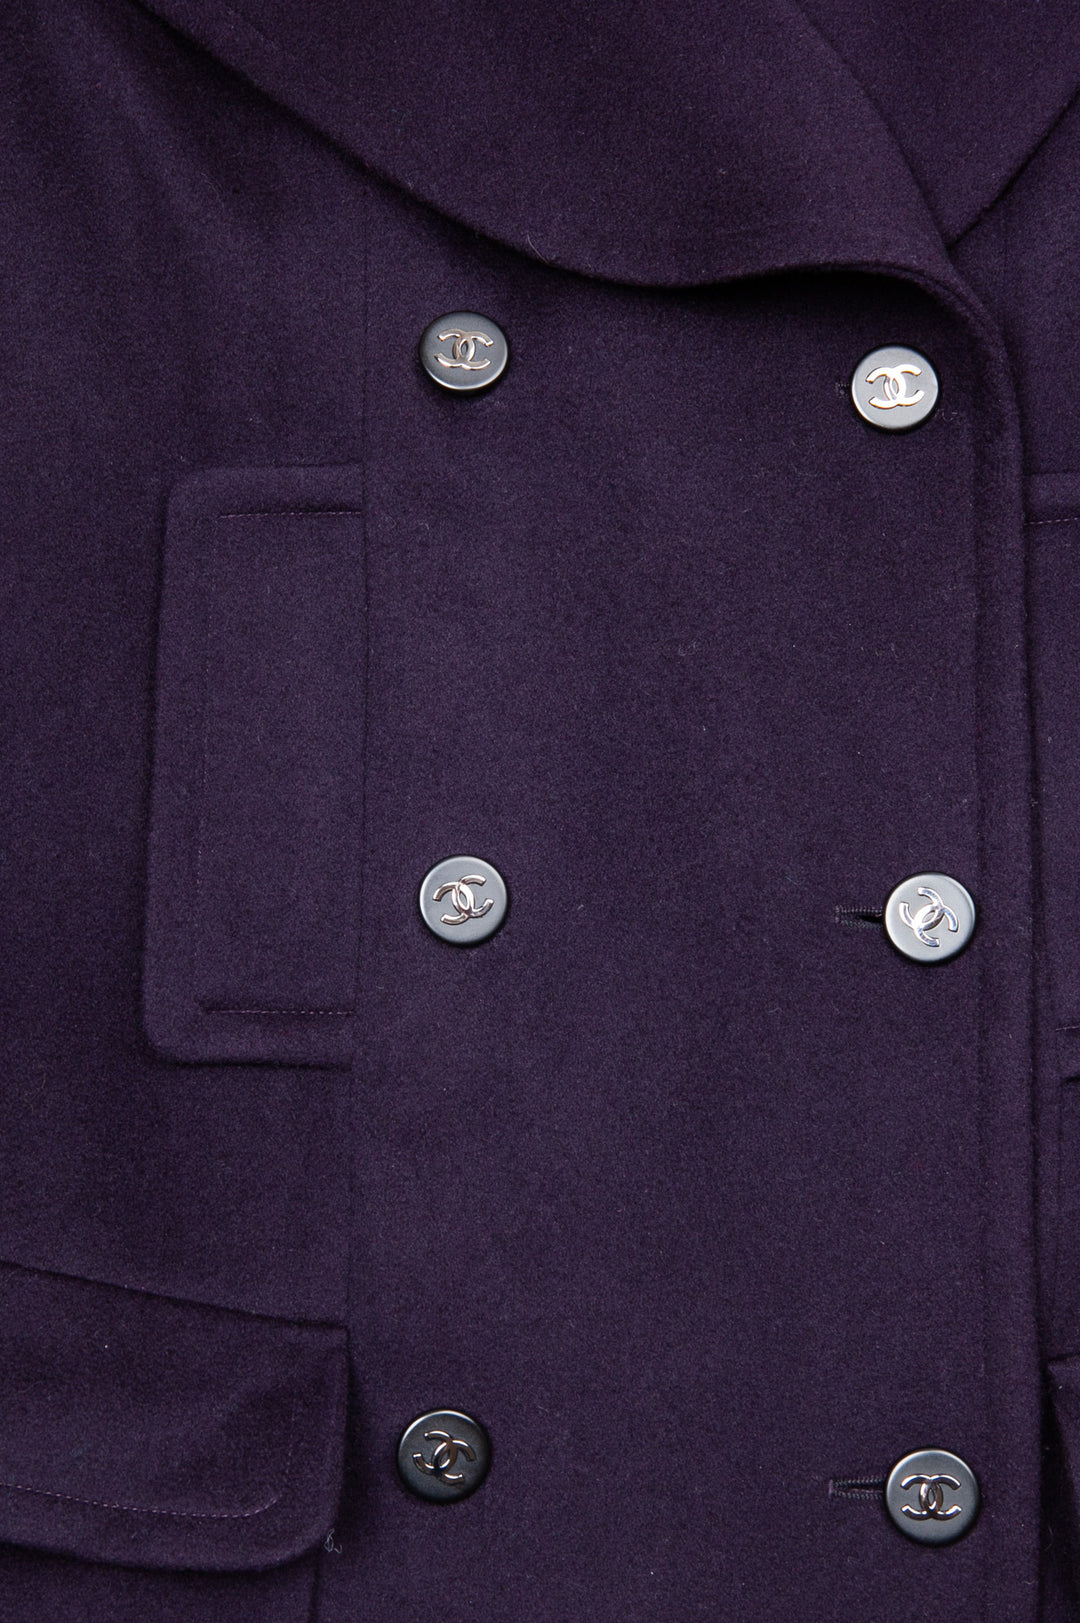 CHANEL Coat Cashmere Purple